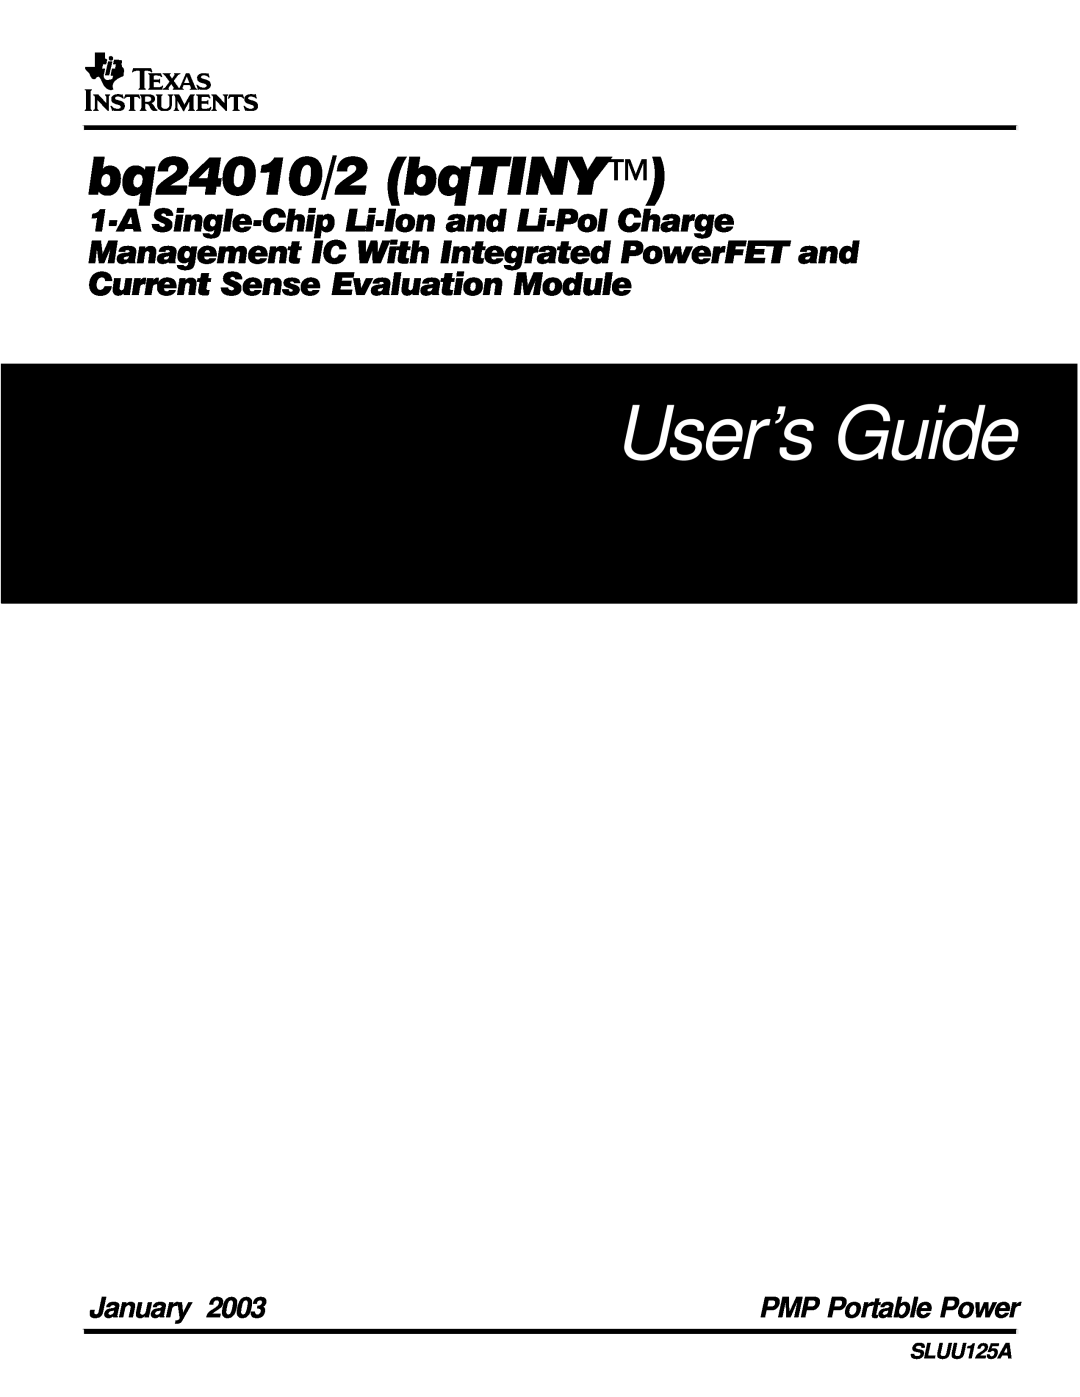 Texas Instruments bq24010/2 manual SLUU125A, User’s Guide, January, PMP Portable Power 